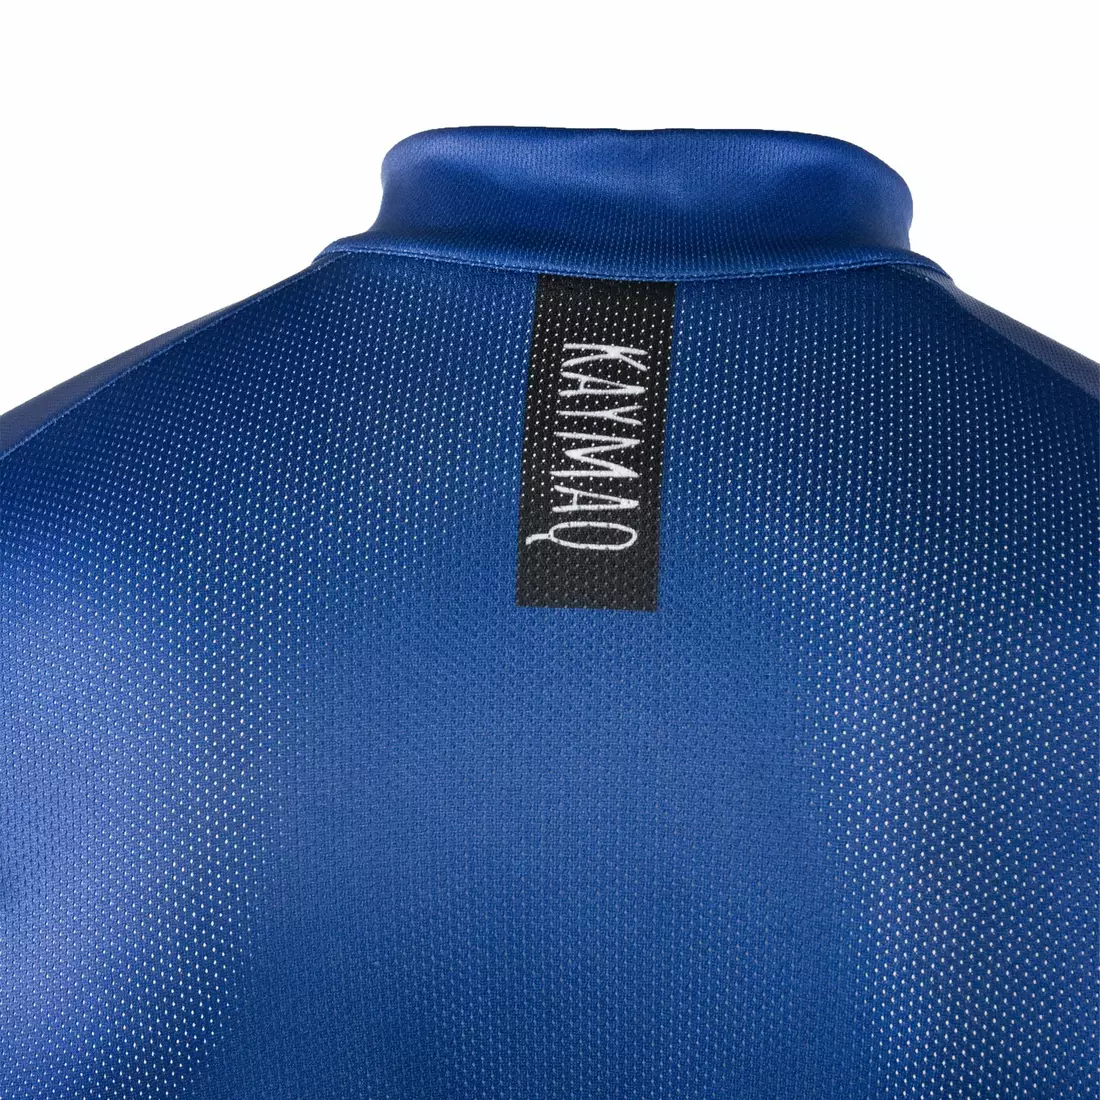 KAYMAQ SLEEVELESS sleeveless men's T-shirt 01.217,blue